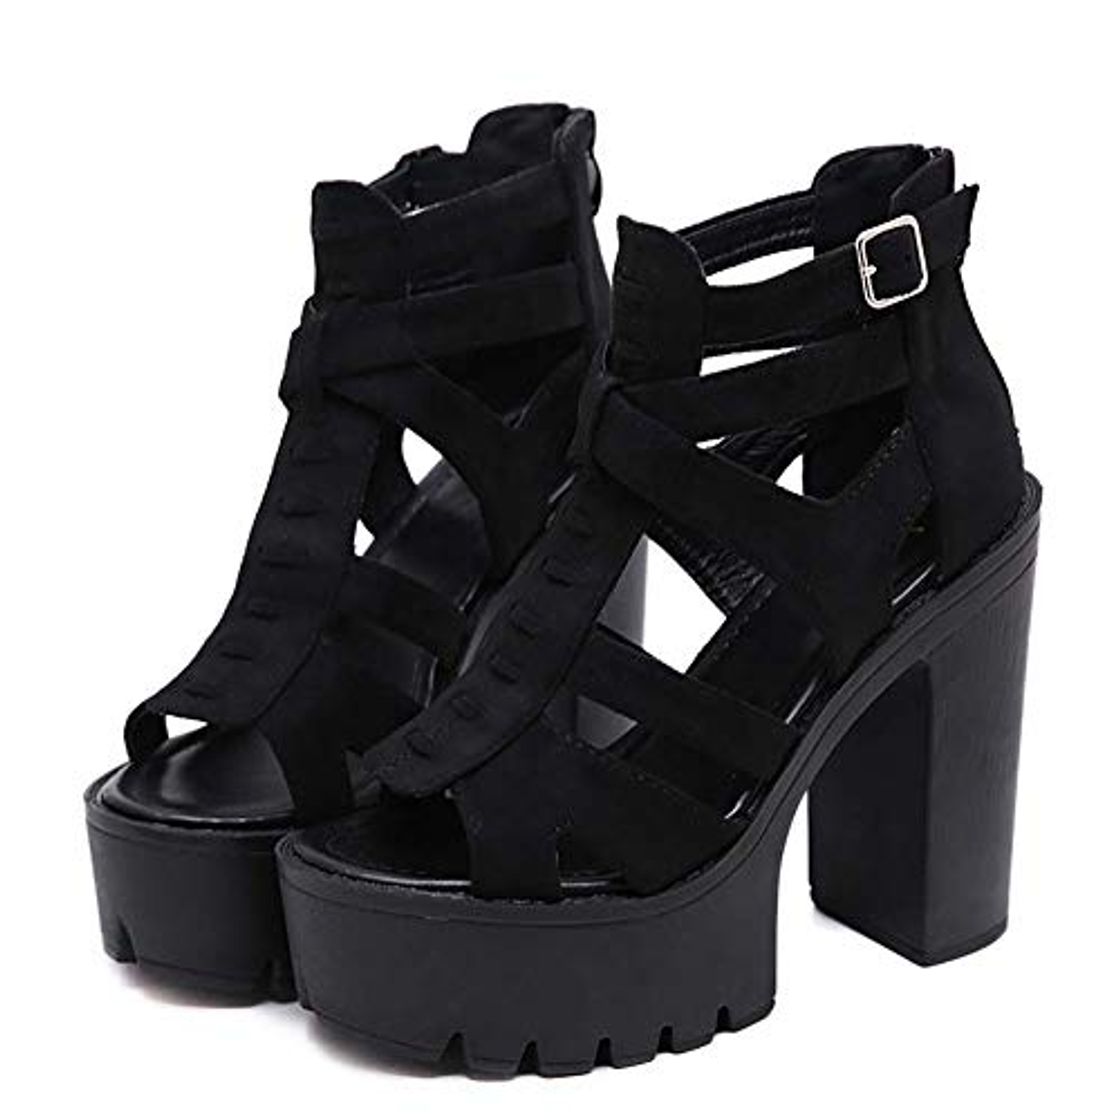 H-O Sandalias de Mujer Zapatos góticos